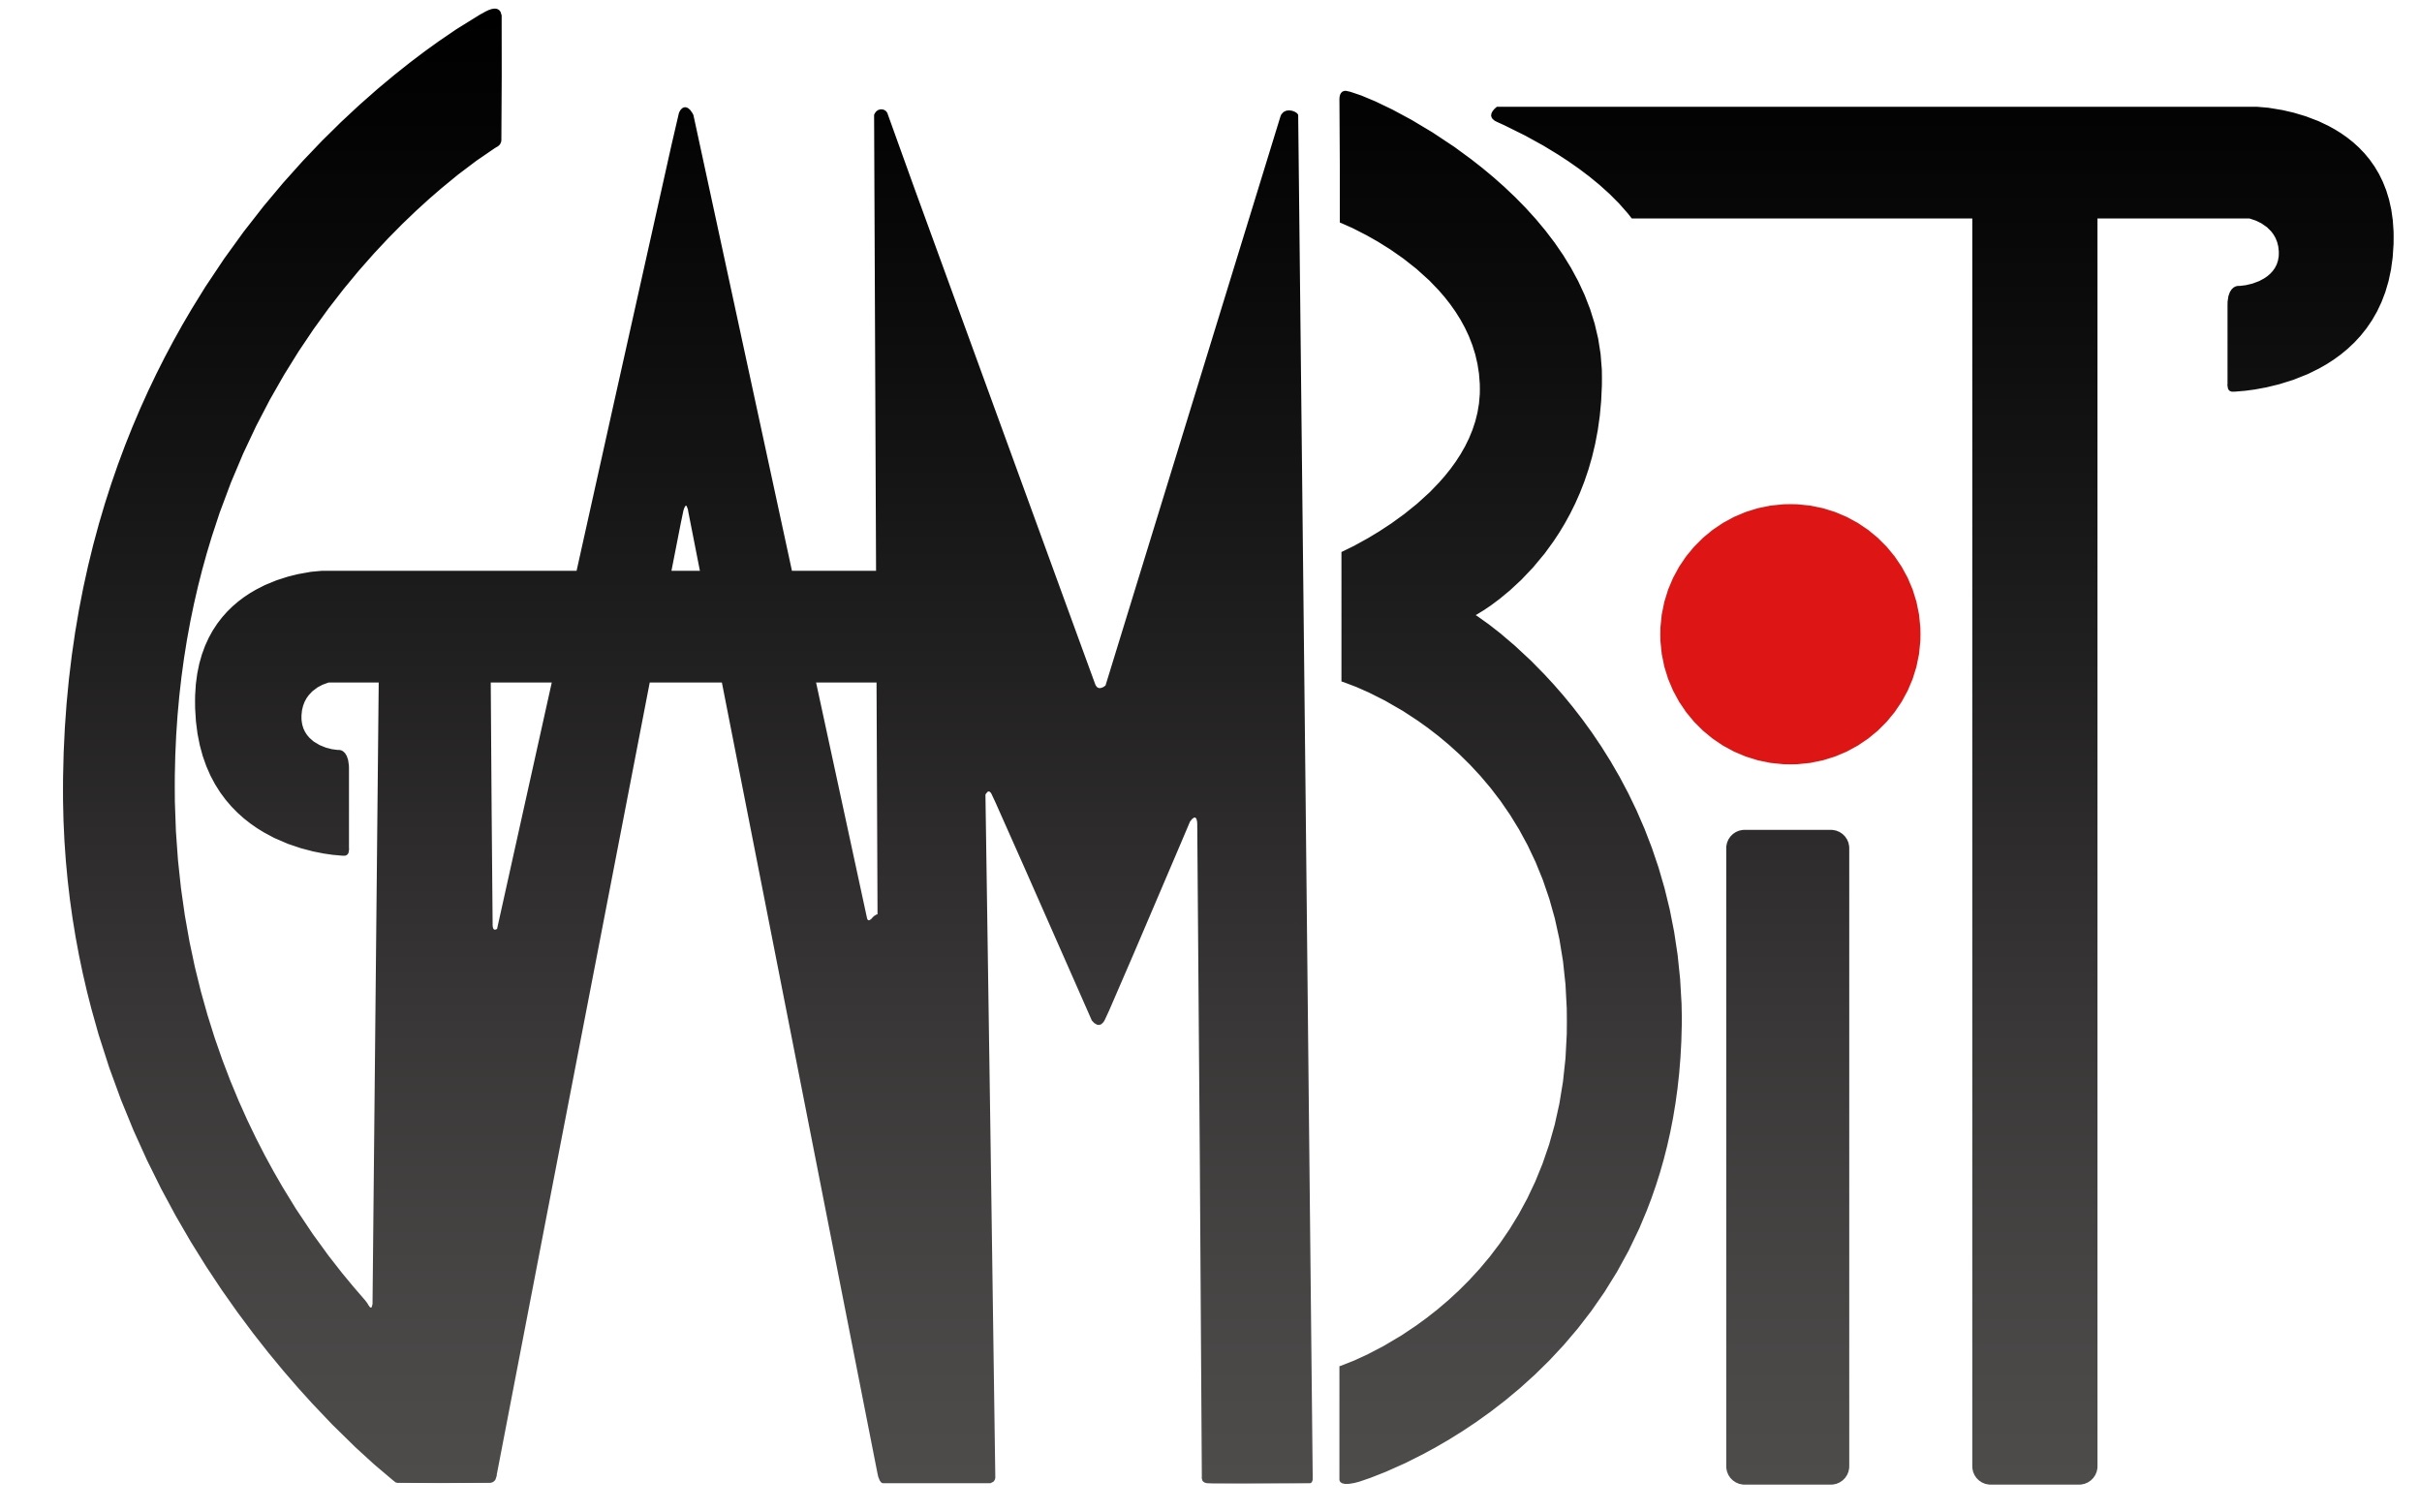 GAMBIT Logo.jpg c30f2db880b034b6ca4229e9347ba687